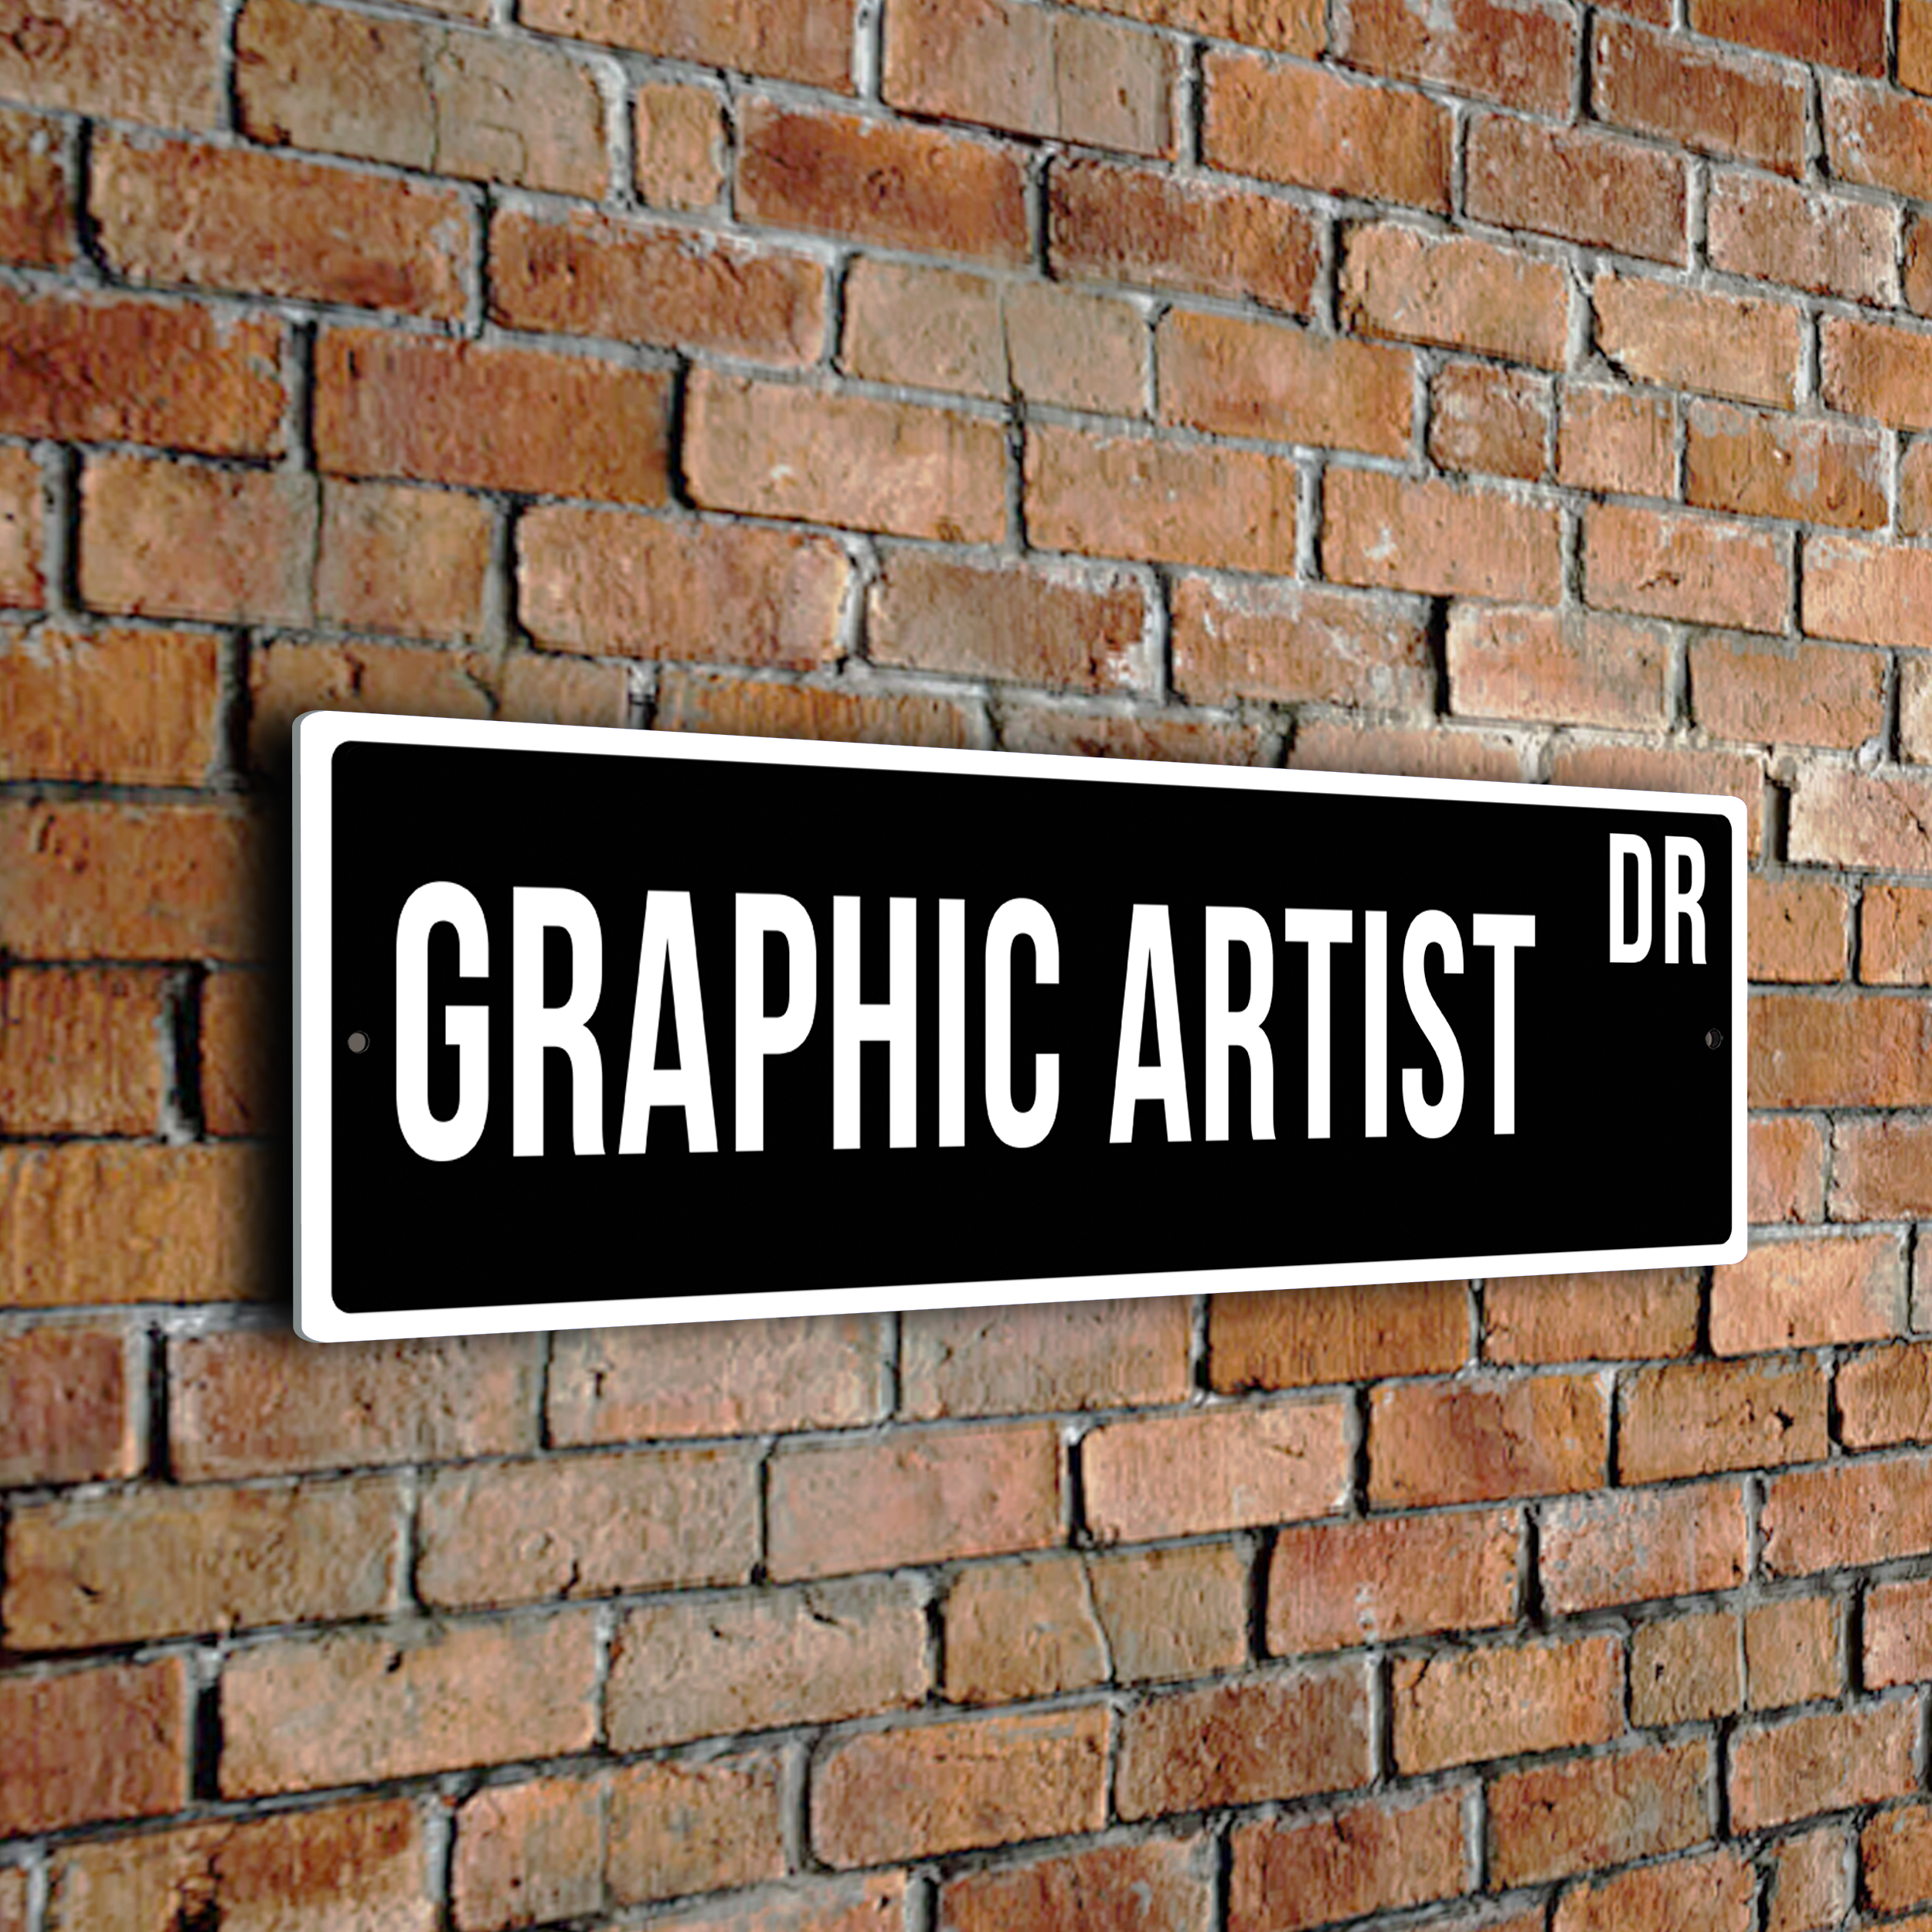 Graphic Artist street sign